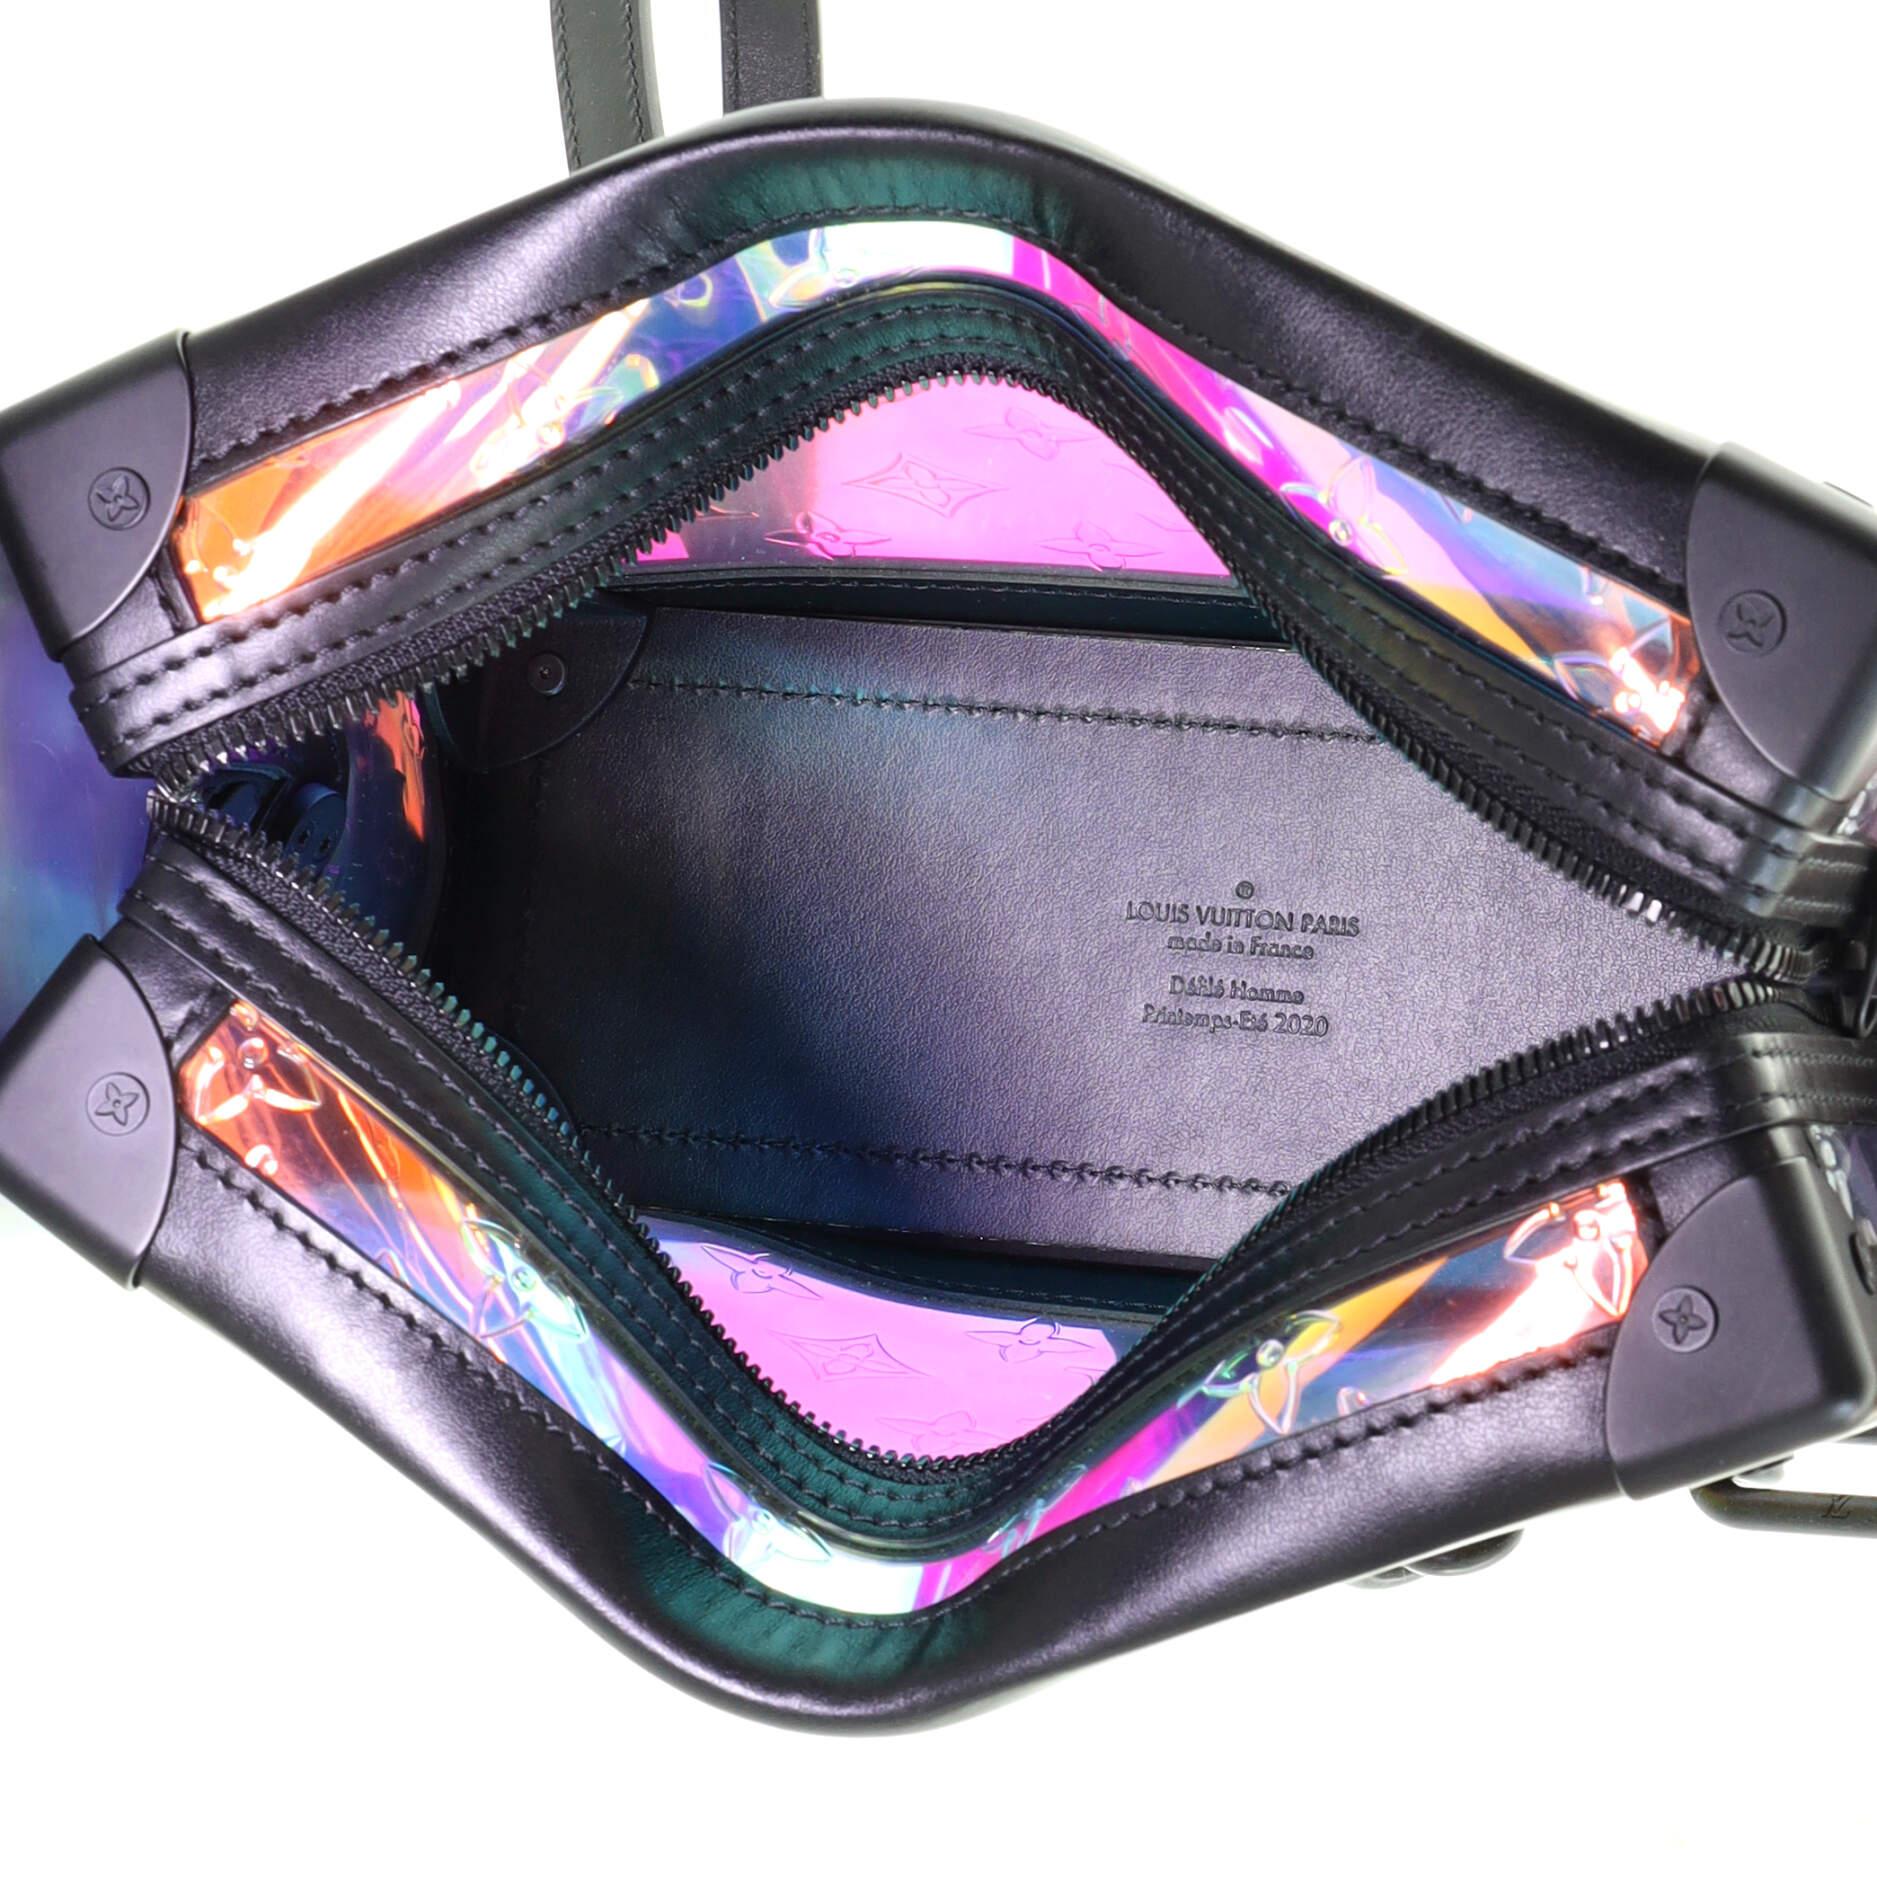 Louis Vuitton Soft Trunk Bag Limited Edition Dark Monogram Prism PVC 1